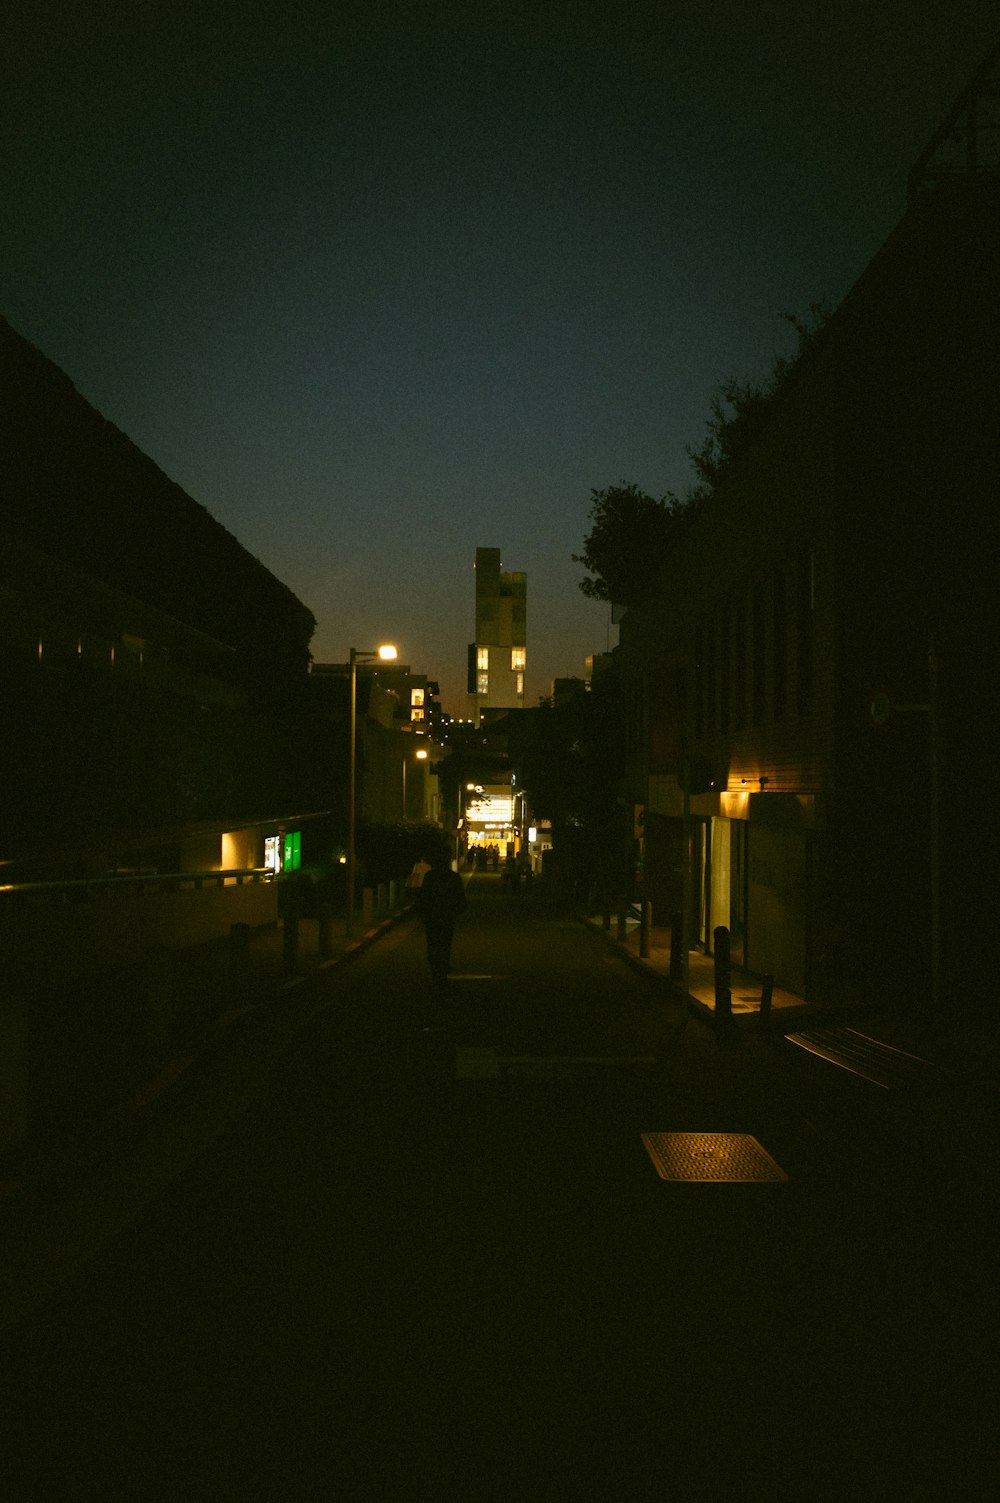 a person walking down a dark street at night